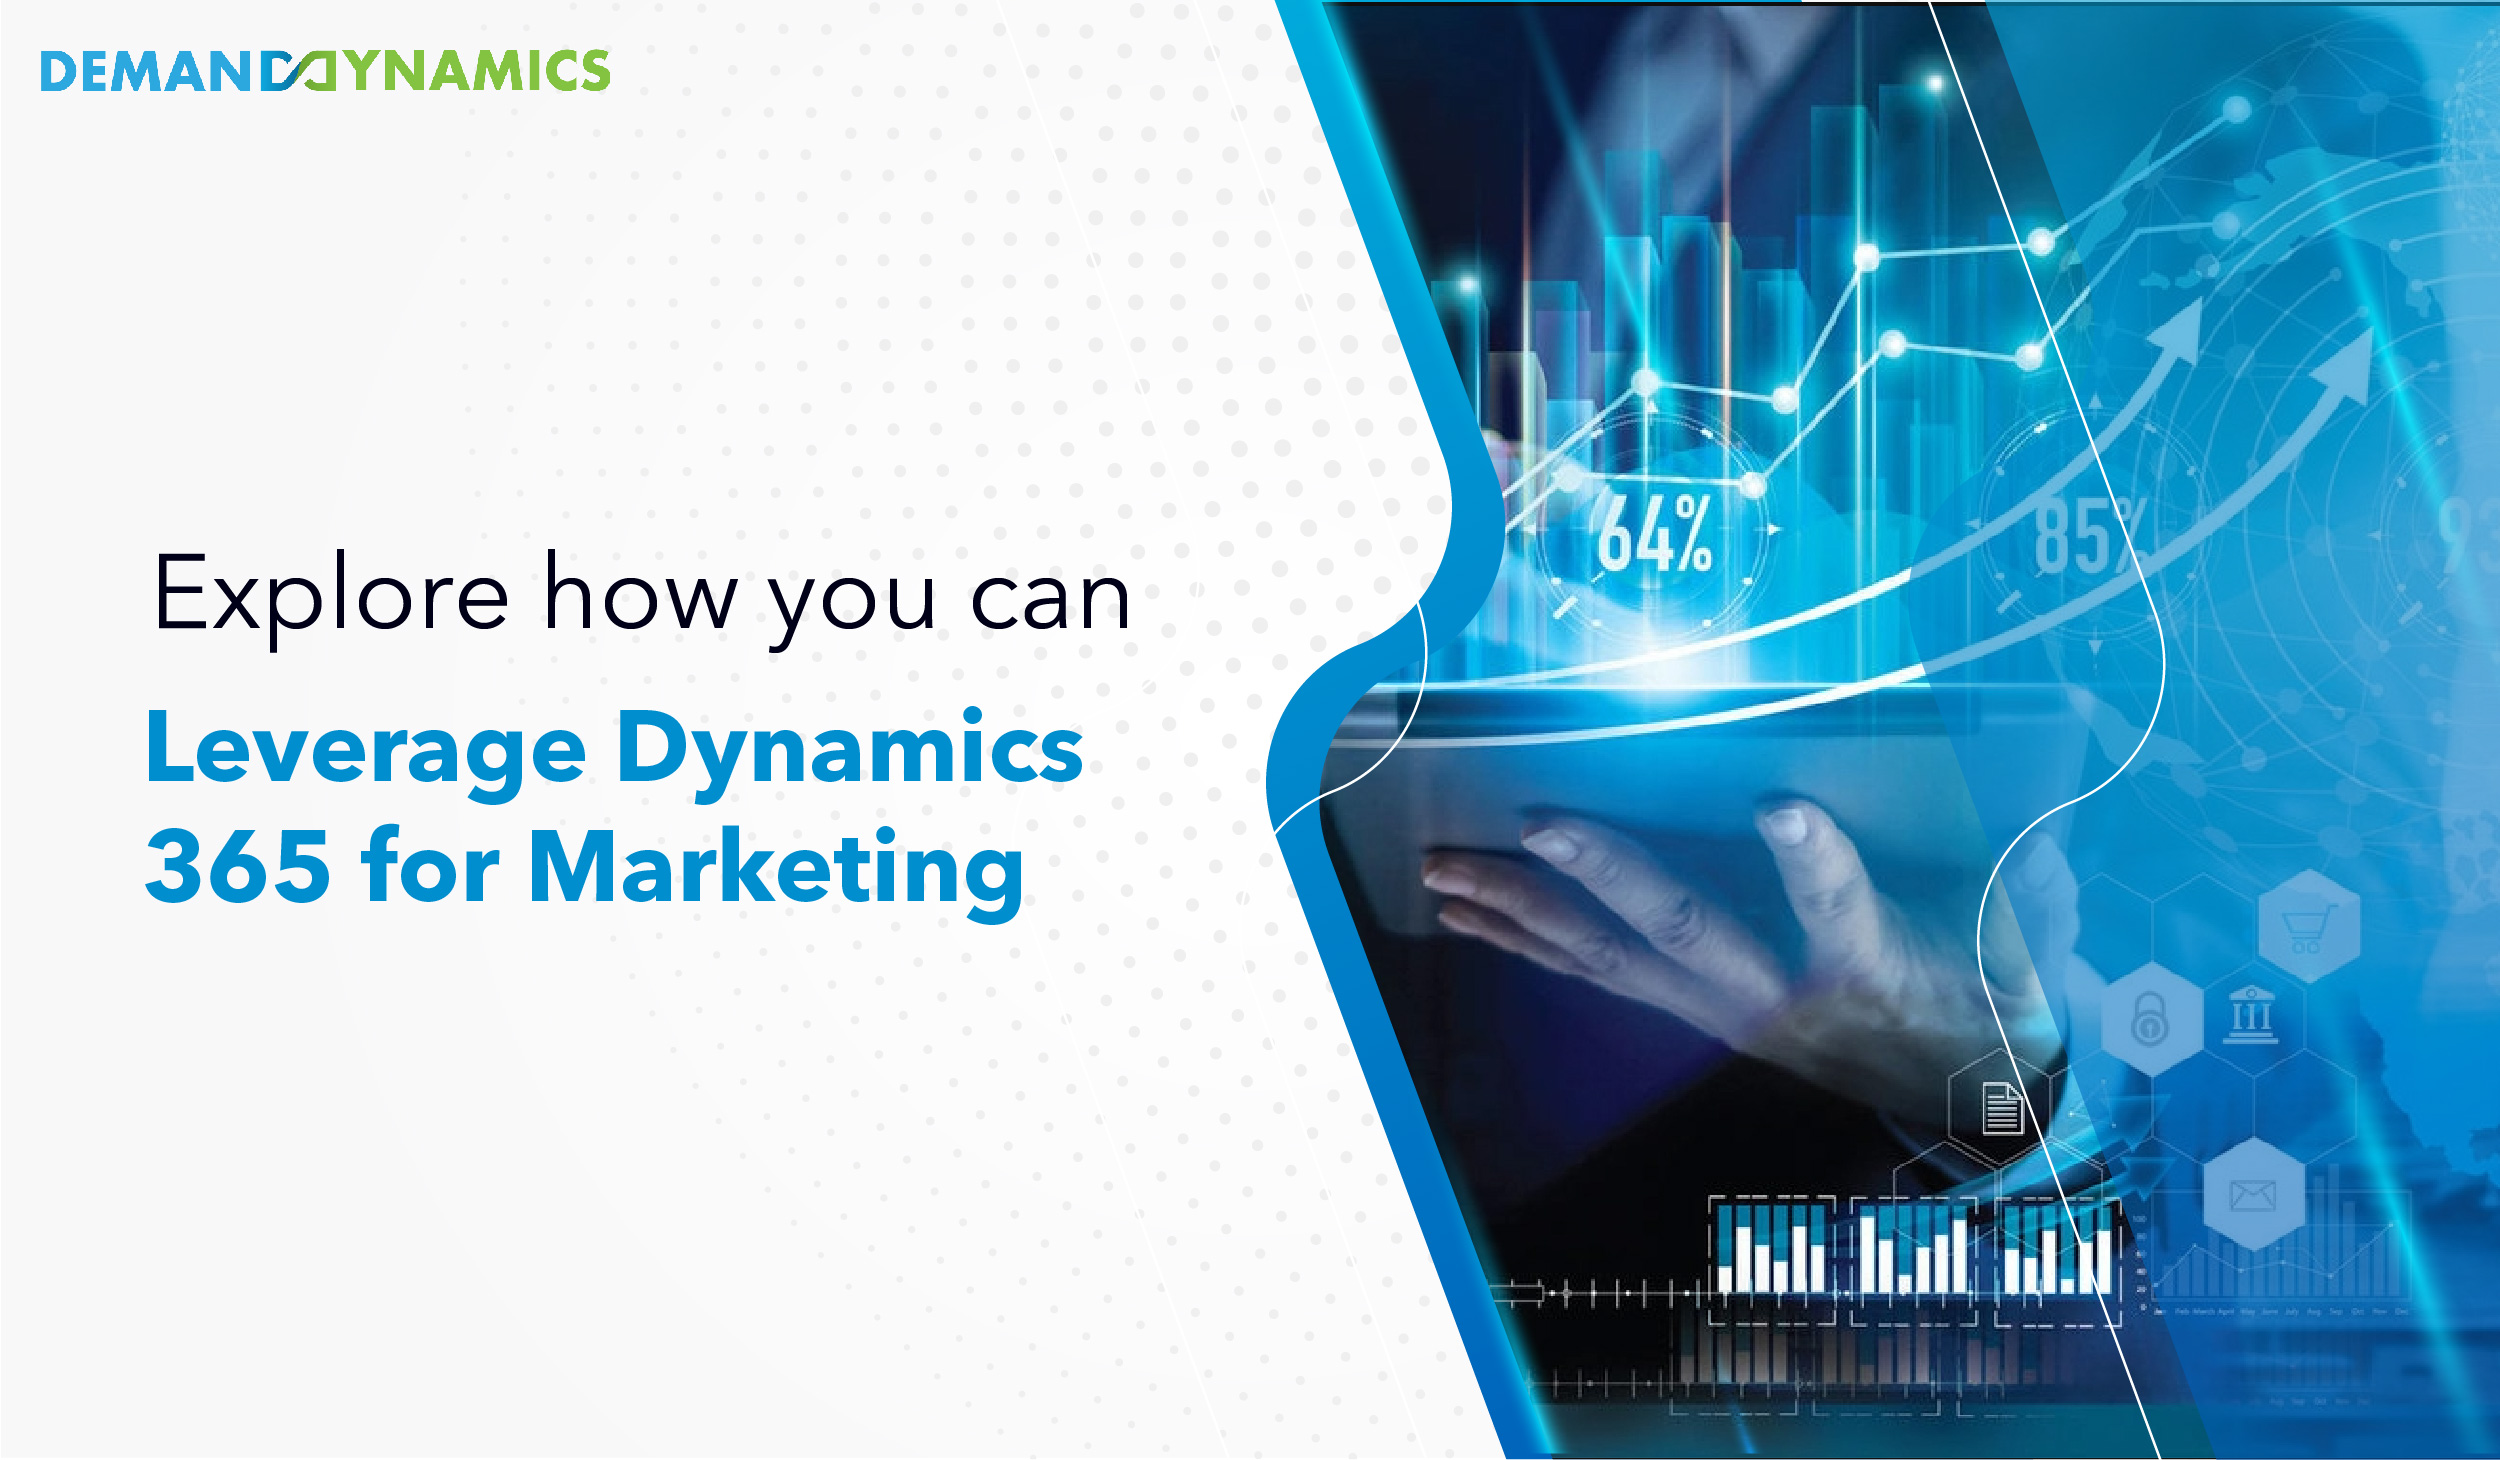 Dynamics 365 for Marketing